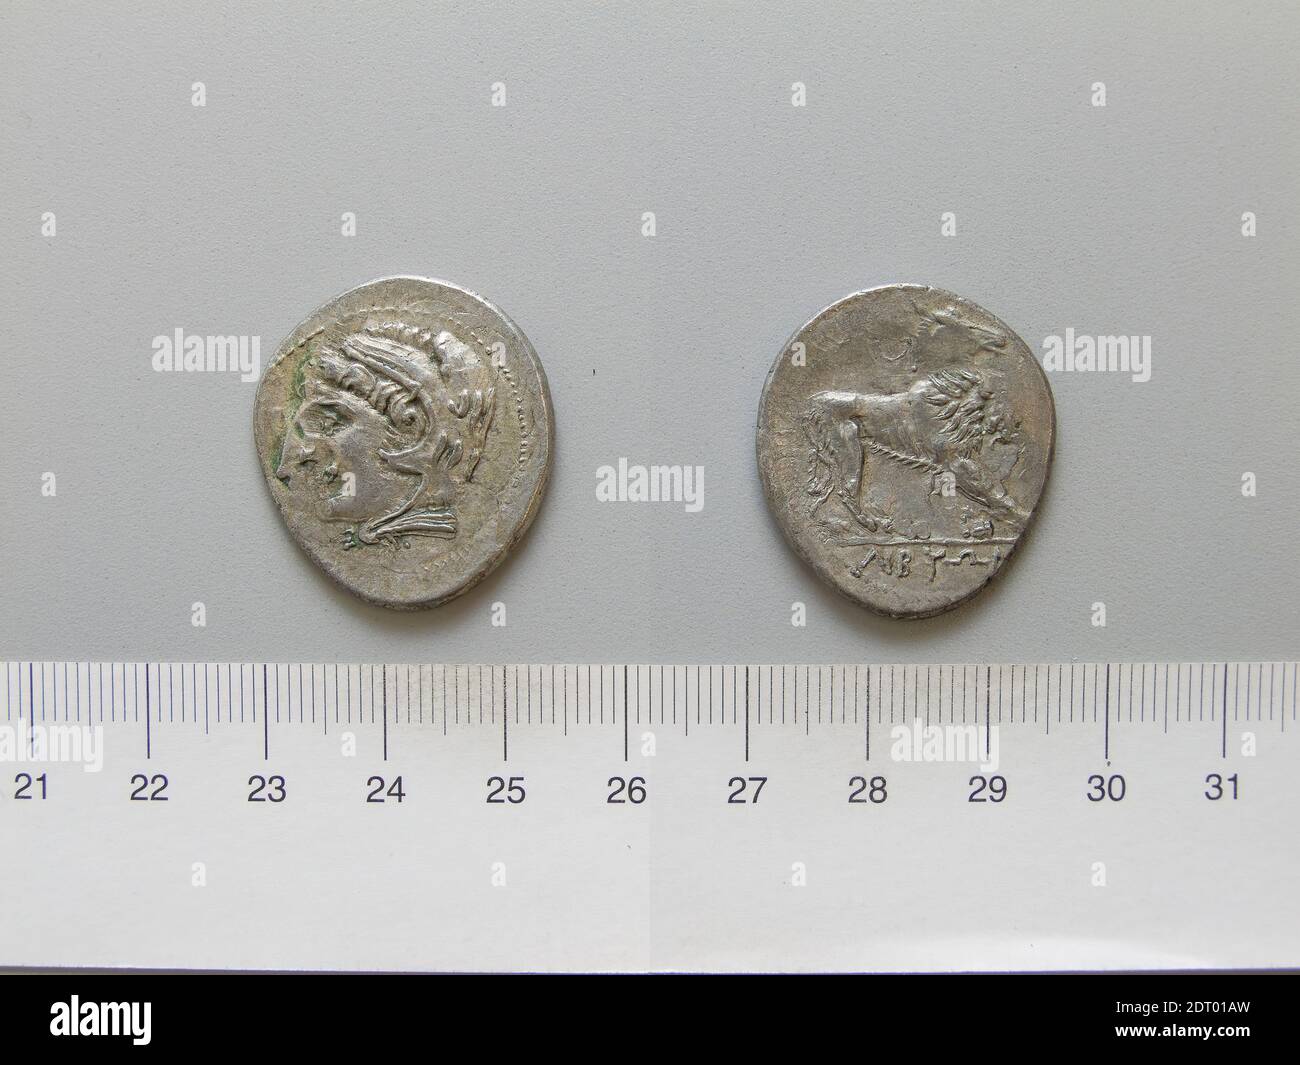 Mint: Libya, Didrachm from Libya, after c. 200 B.C., Silver, 7.31 g, 12:00, 27.7 mm, Made in Libya, Greek, after 3rd century B.C., Numismatics Stock Photo